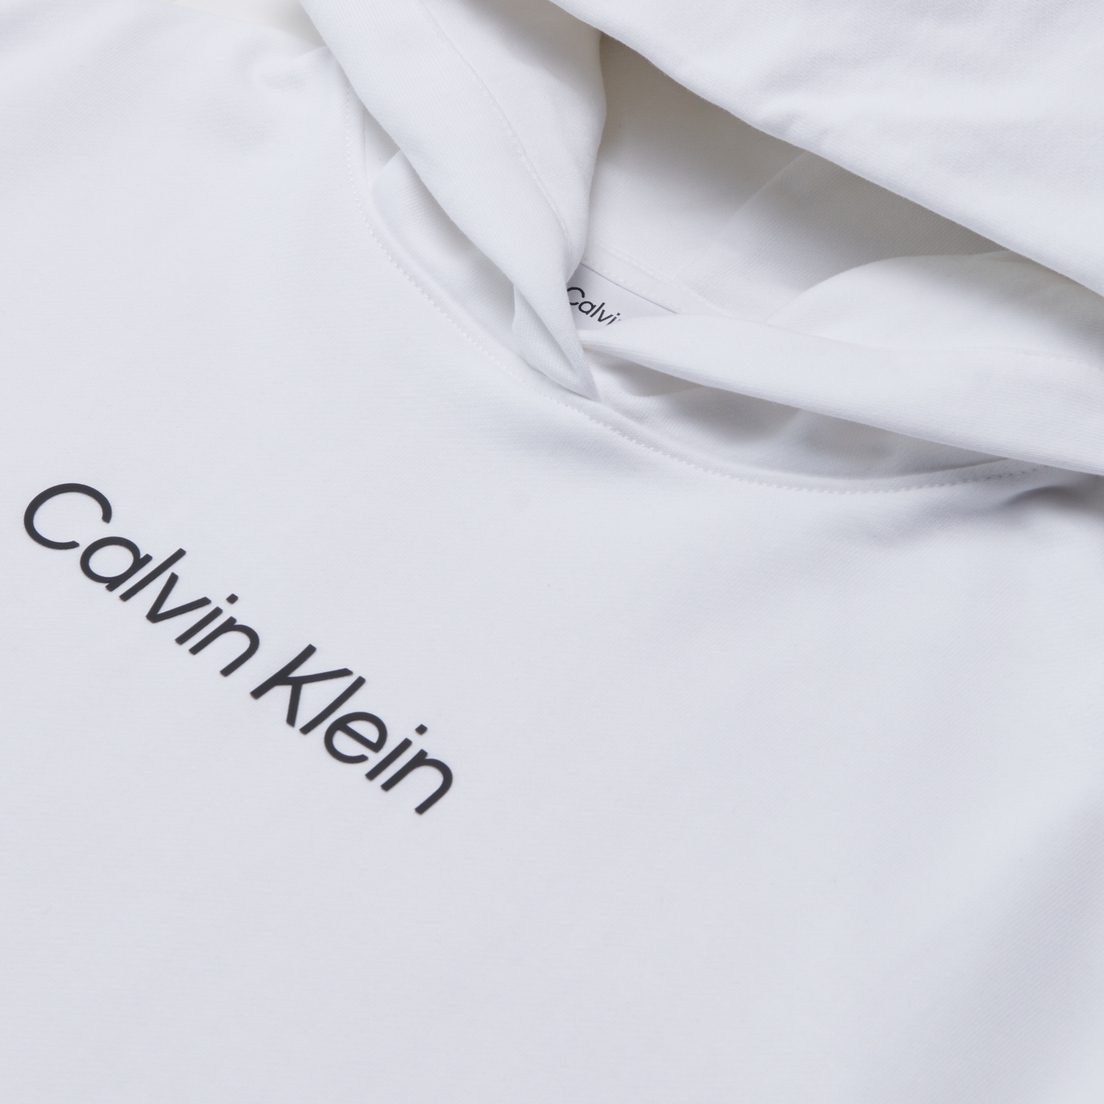 Calvin Klein Jeans Женская толстовка Hero Logo Hoodie